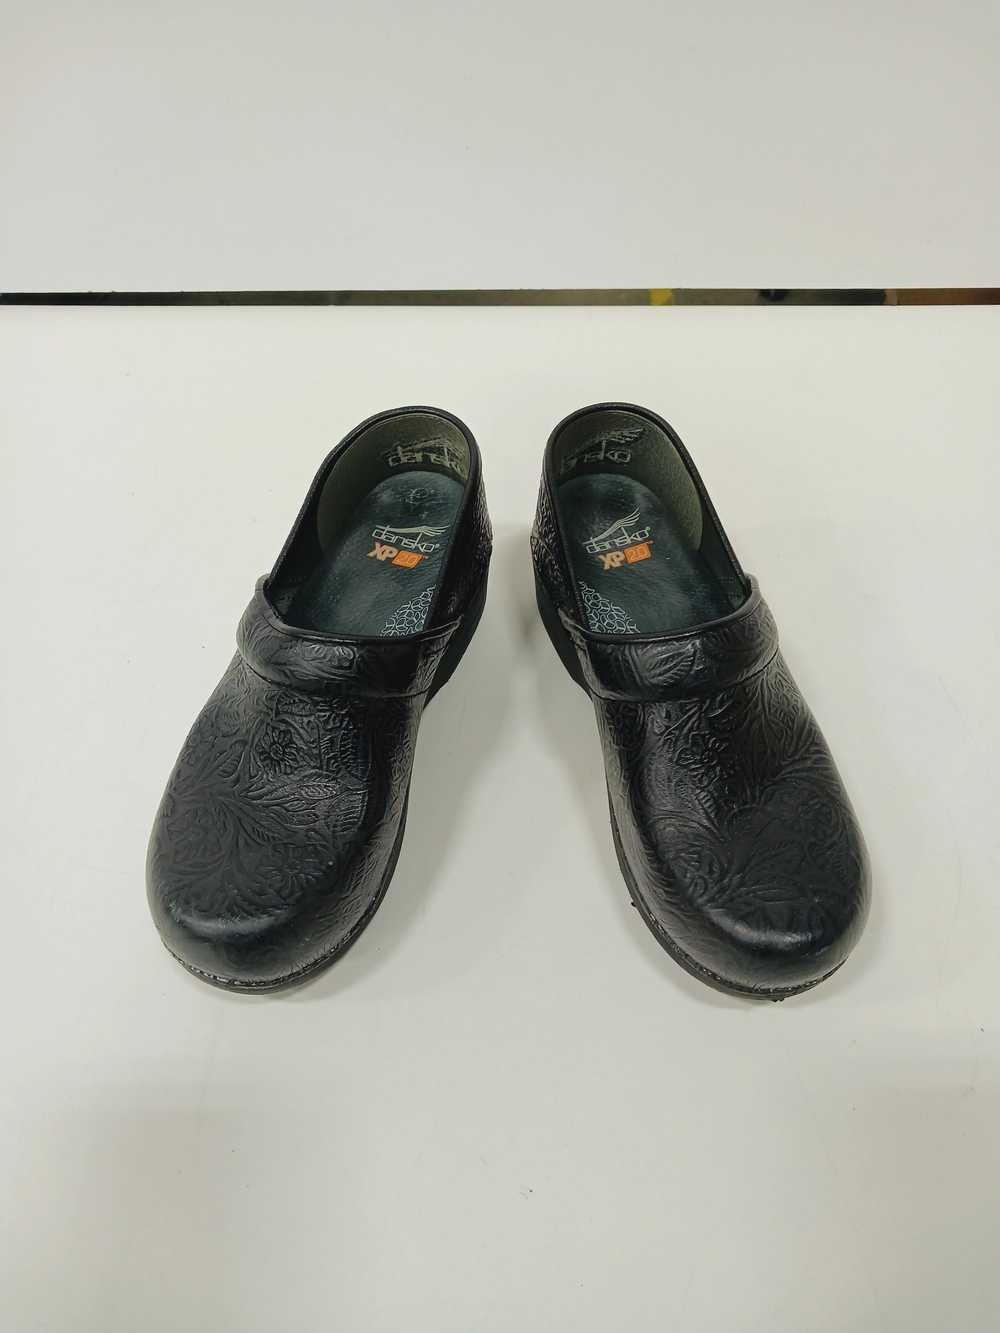 Dansko Women's Black Tooled Leather Clogs Size 37 - image 2